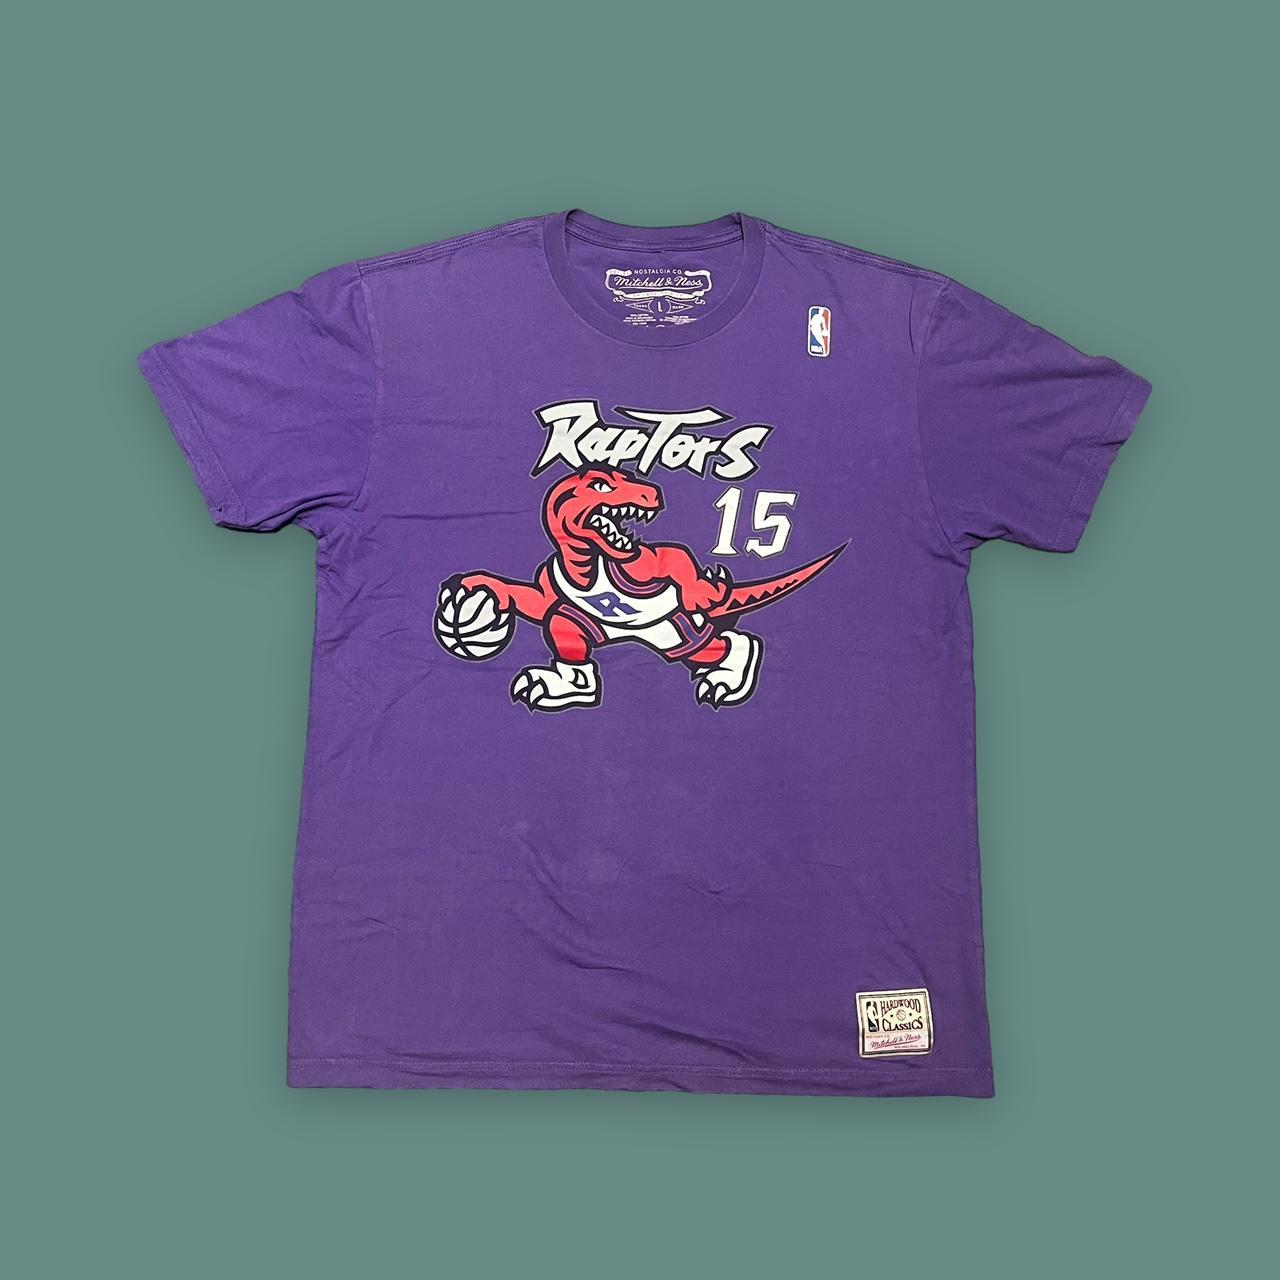 Mens Toronto Raptors Vince Carter purple classic jersey - Depop